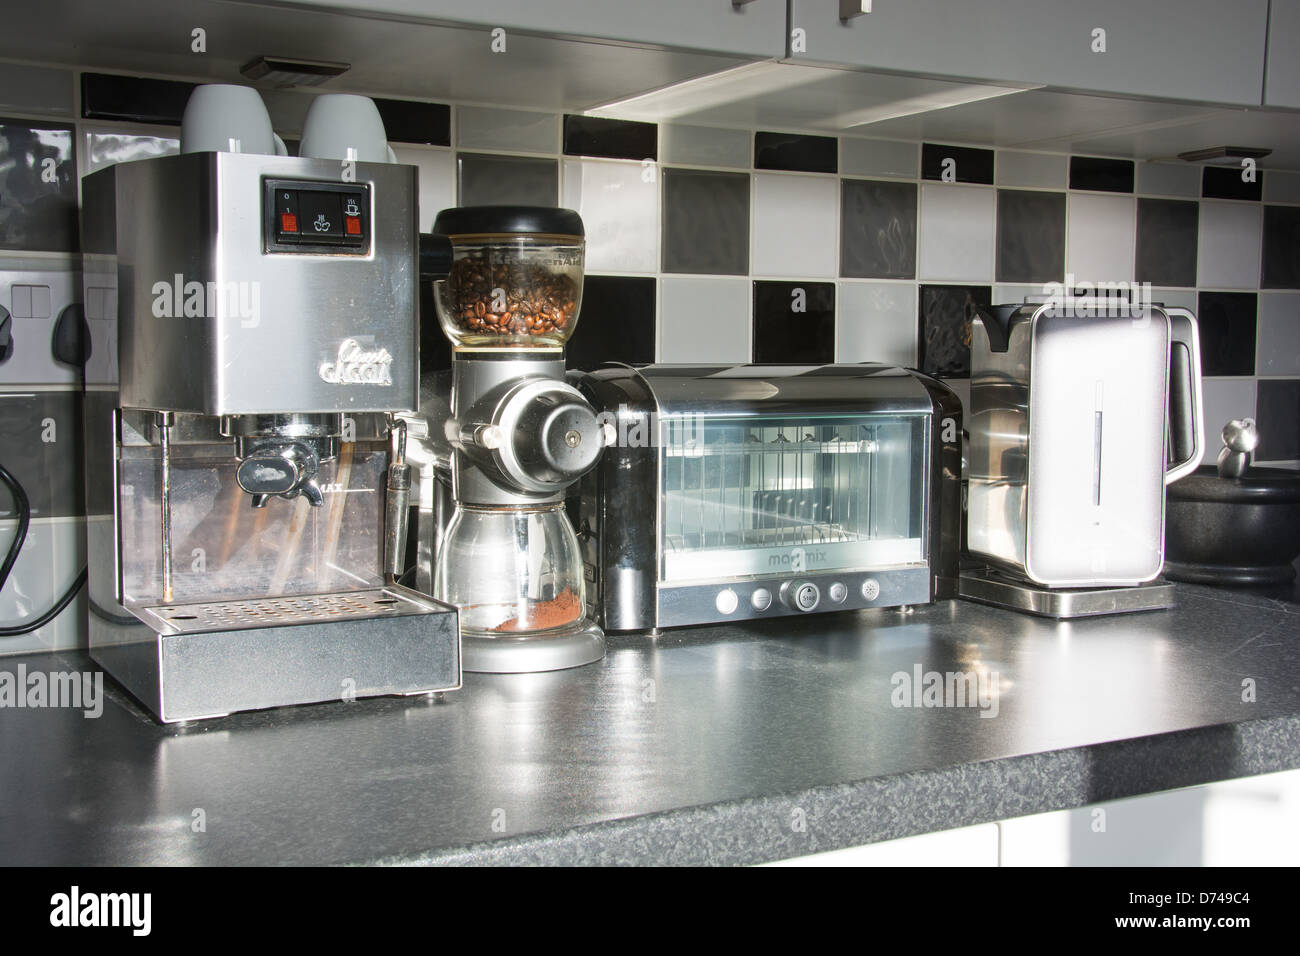 https://c8.alamy.com/comp/D749C4/modern-kitchen-appliances-coffee-machine-bean-grinder-toaster-kettle-D749C4.jpg